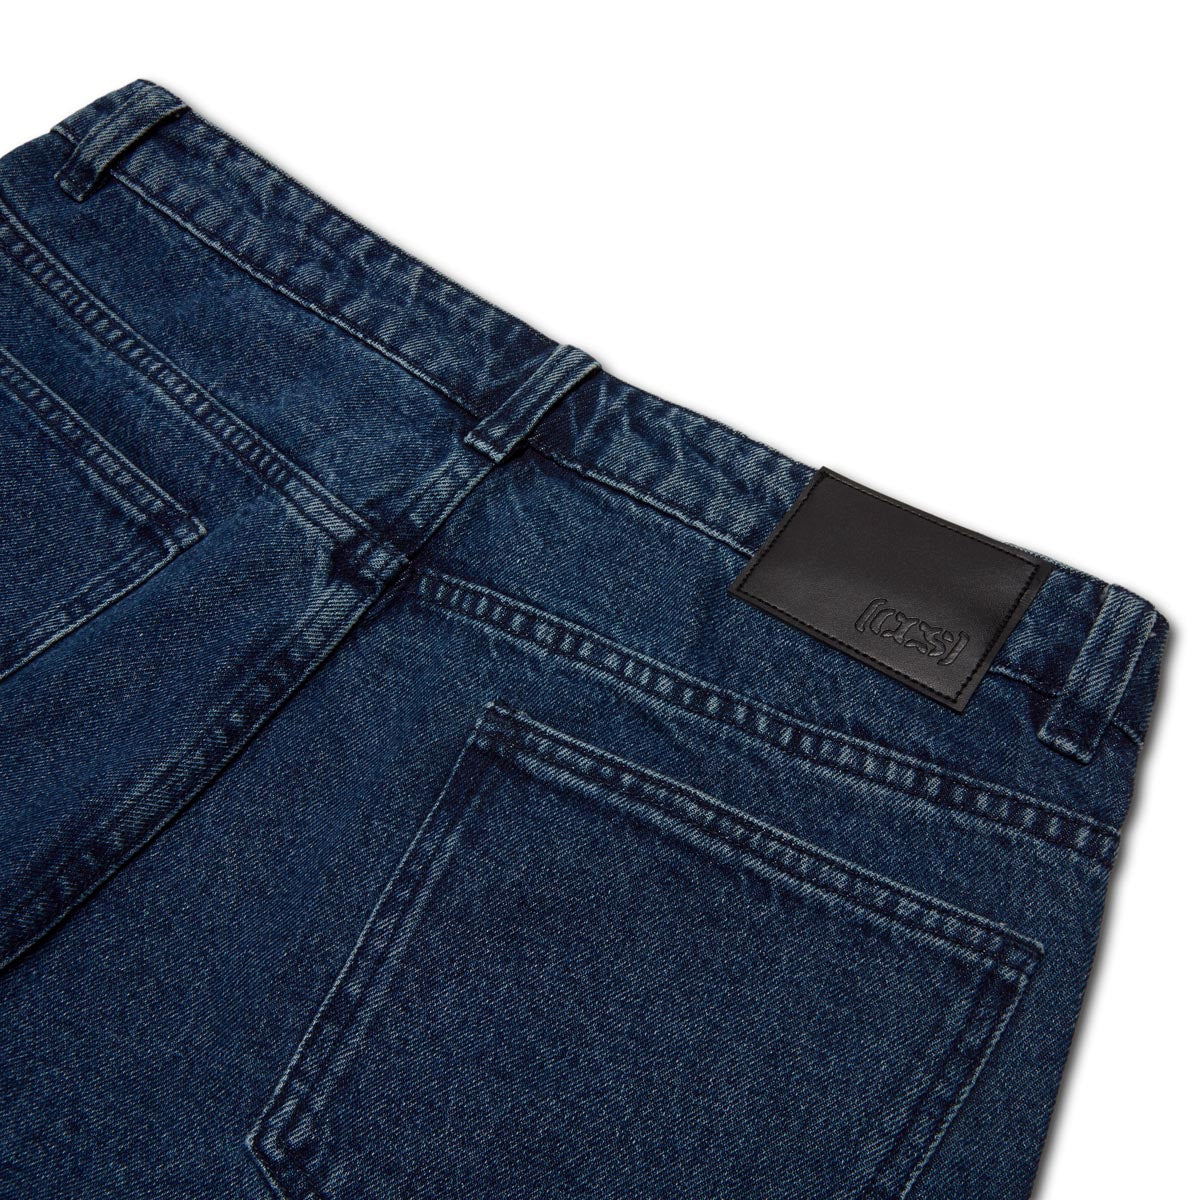 CCS Double Knee Original Relaxed Denim Jeans - True Blue image 6